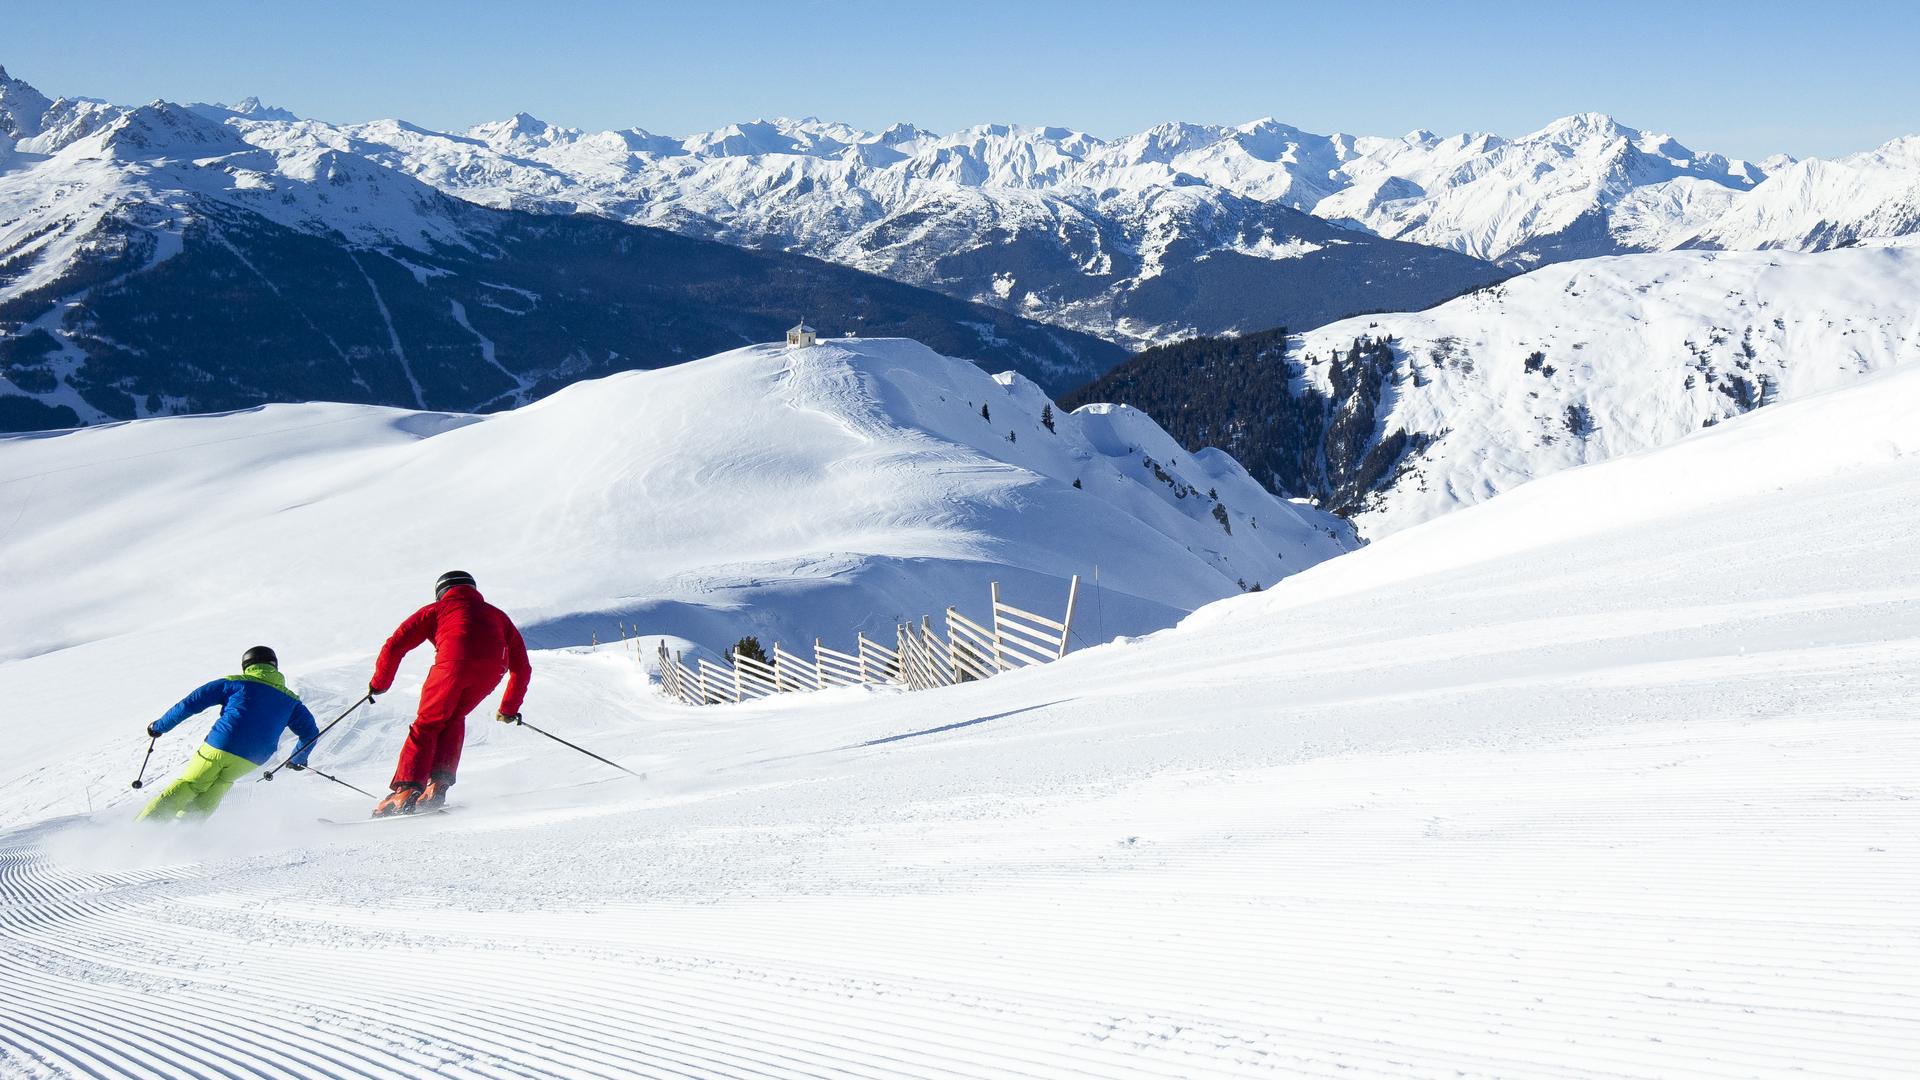 Bons plans ski La Plagne pas cher- Forfaits ski à petits prix